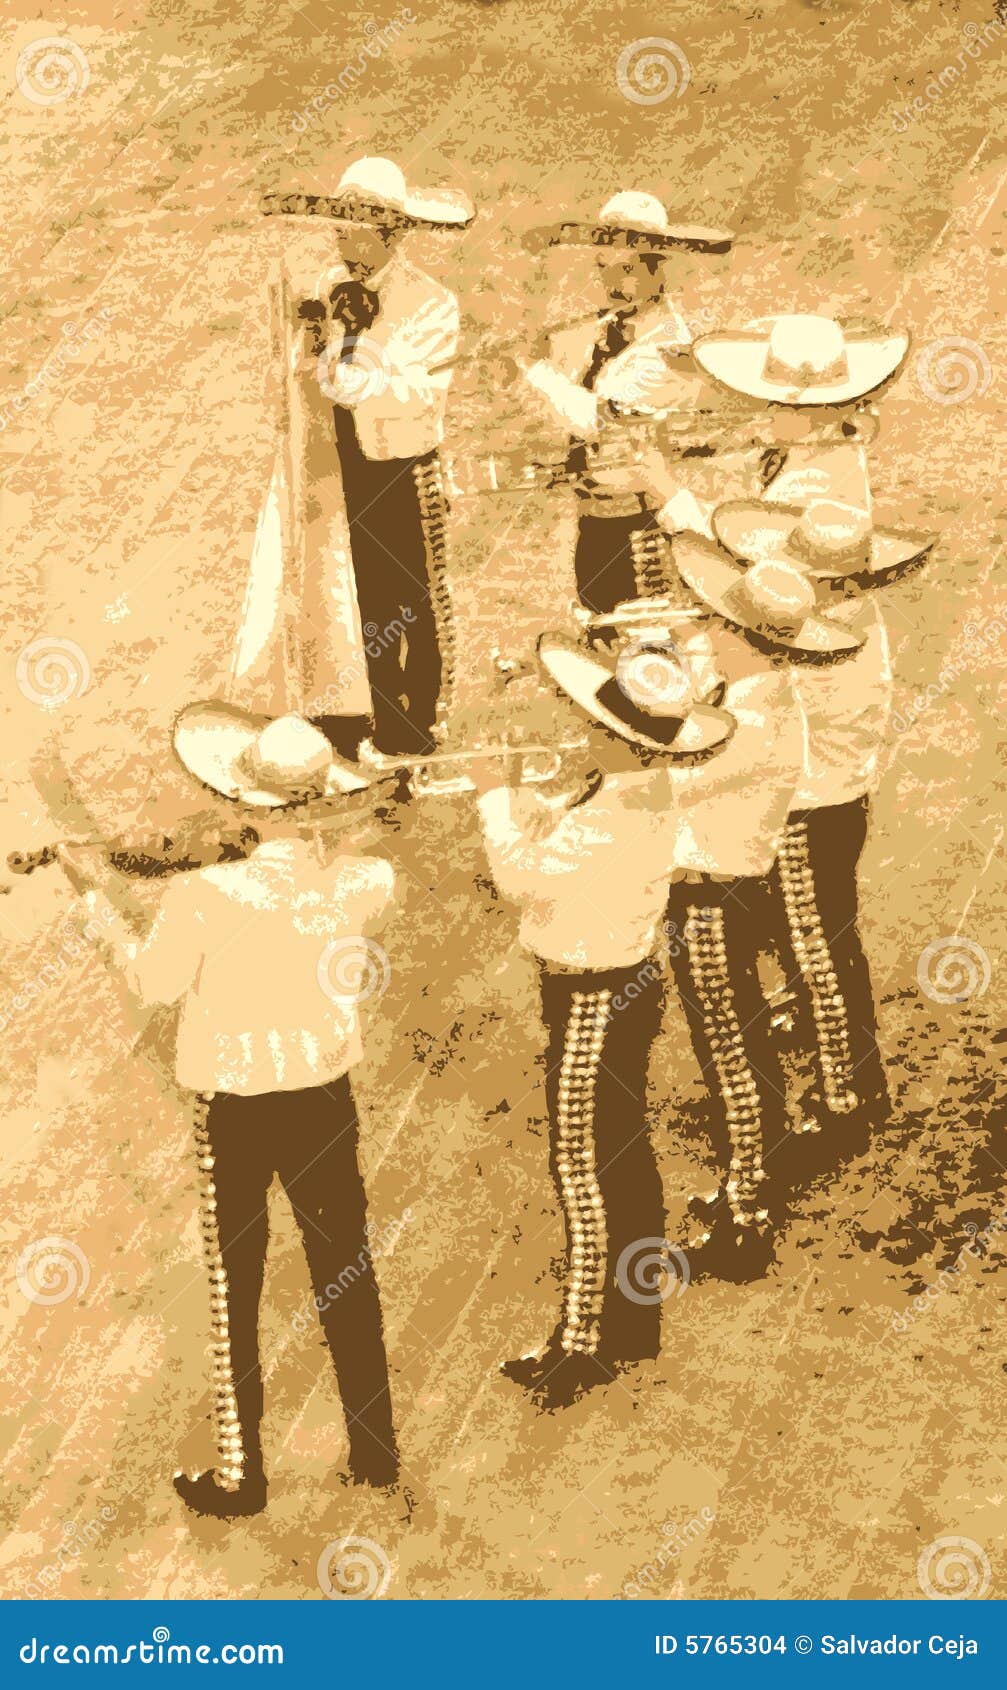 mariachi group